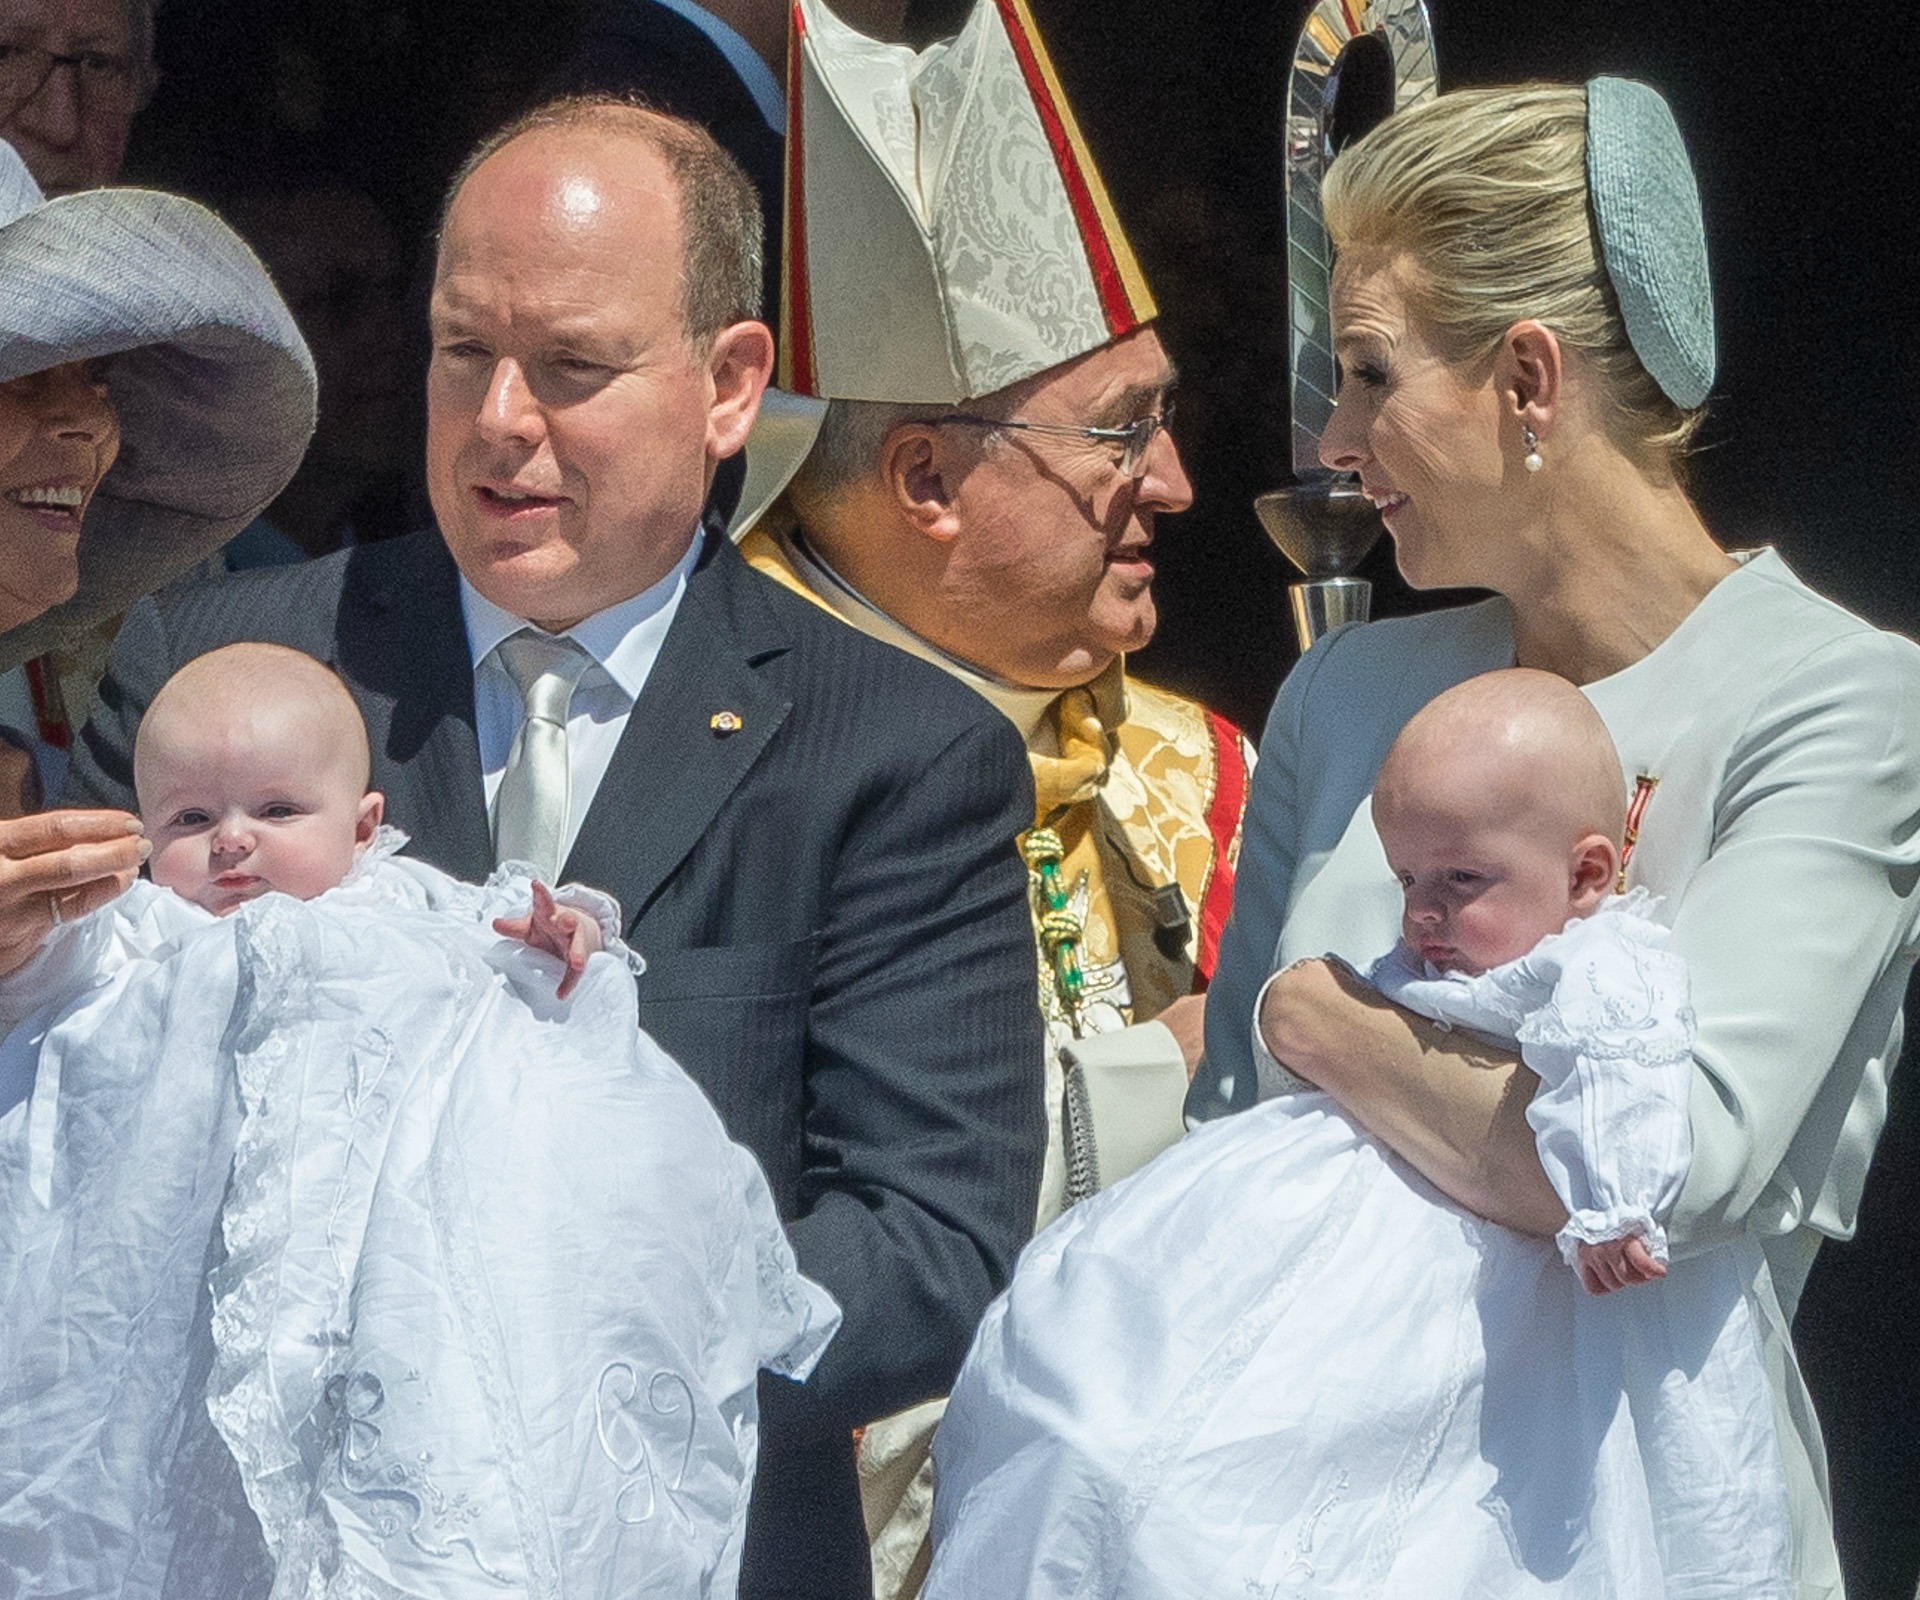 Prince Albert and Princess Charlene of Monaco christen their twins